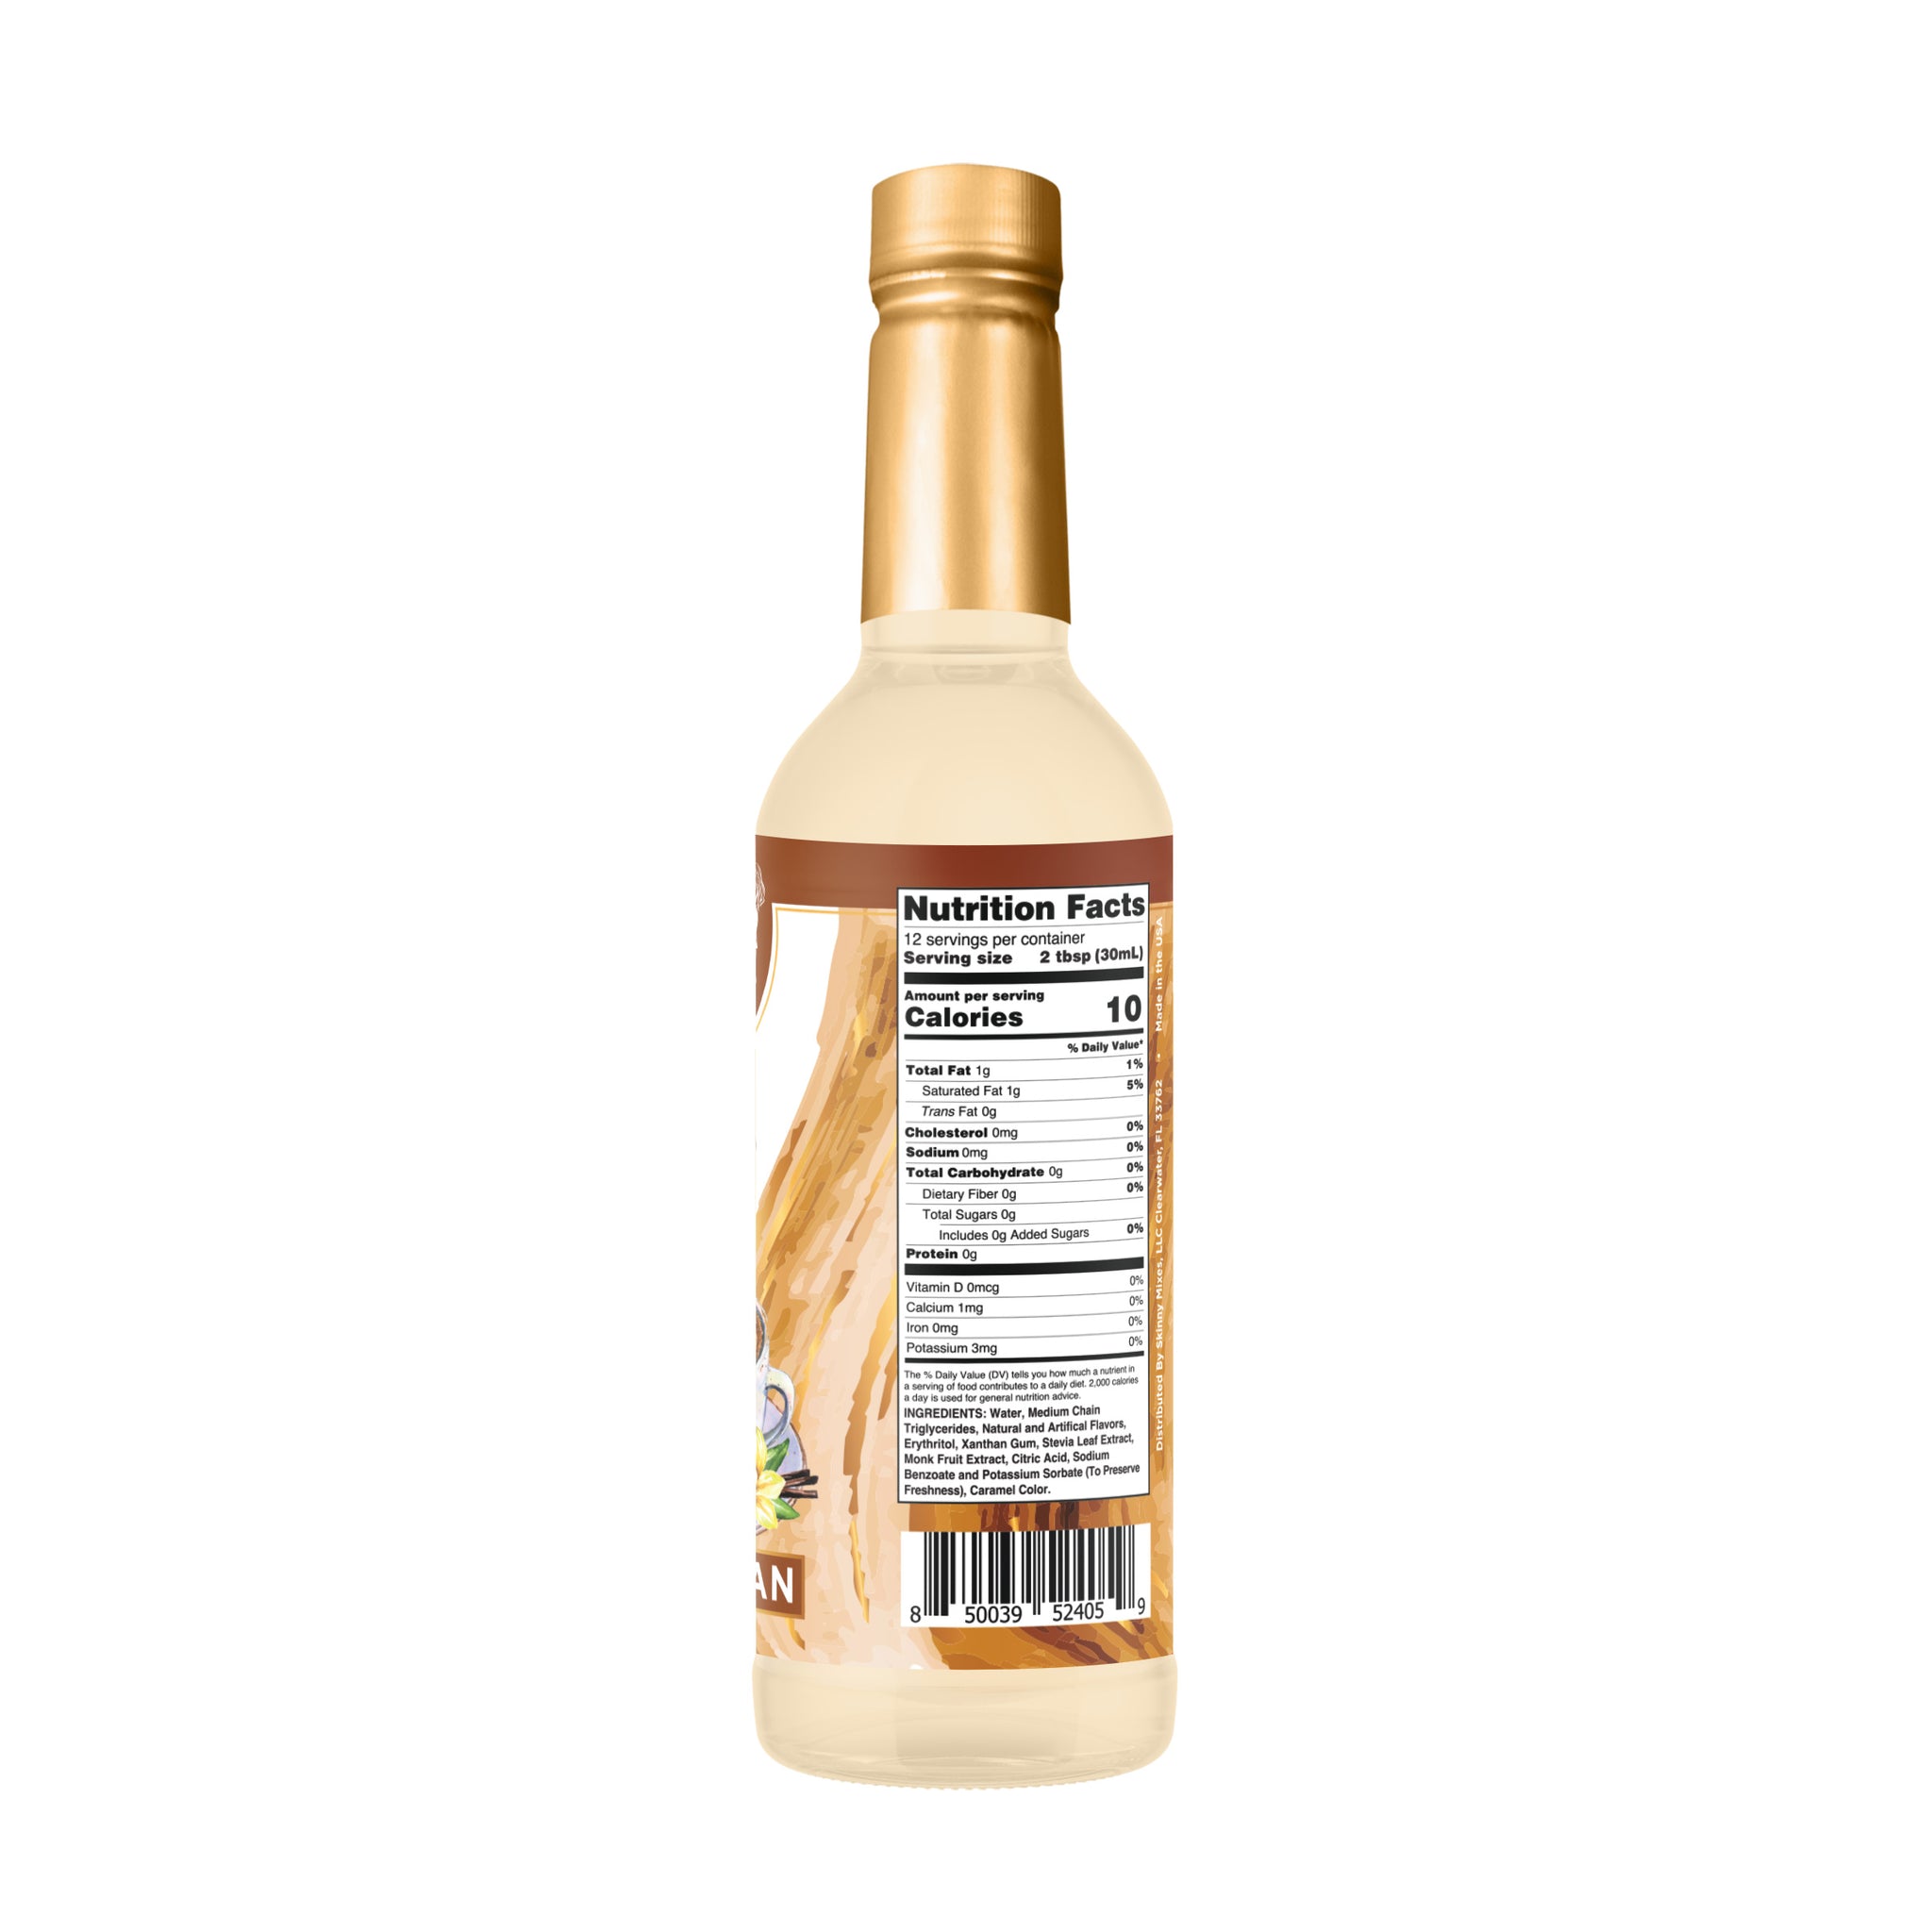 Keto Vanilla Bean Syrup with MCT - Mini 375mL Bottle